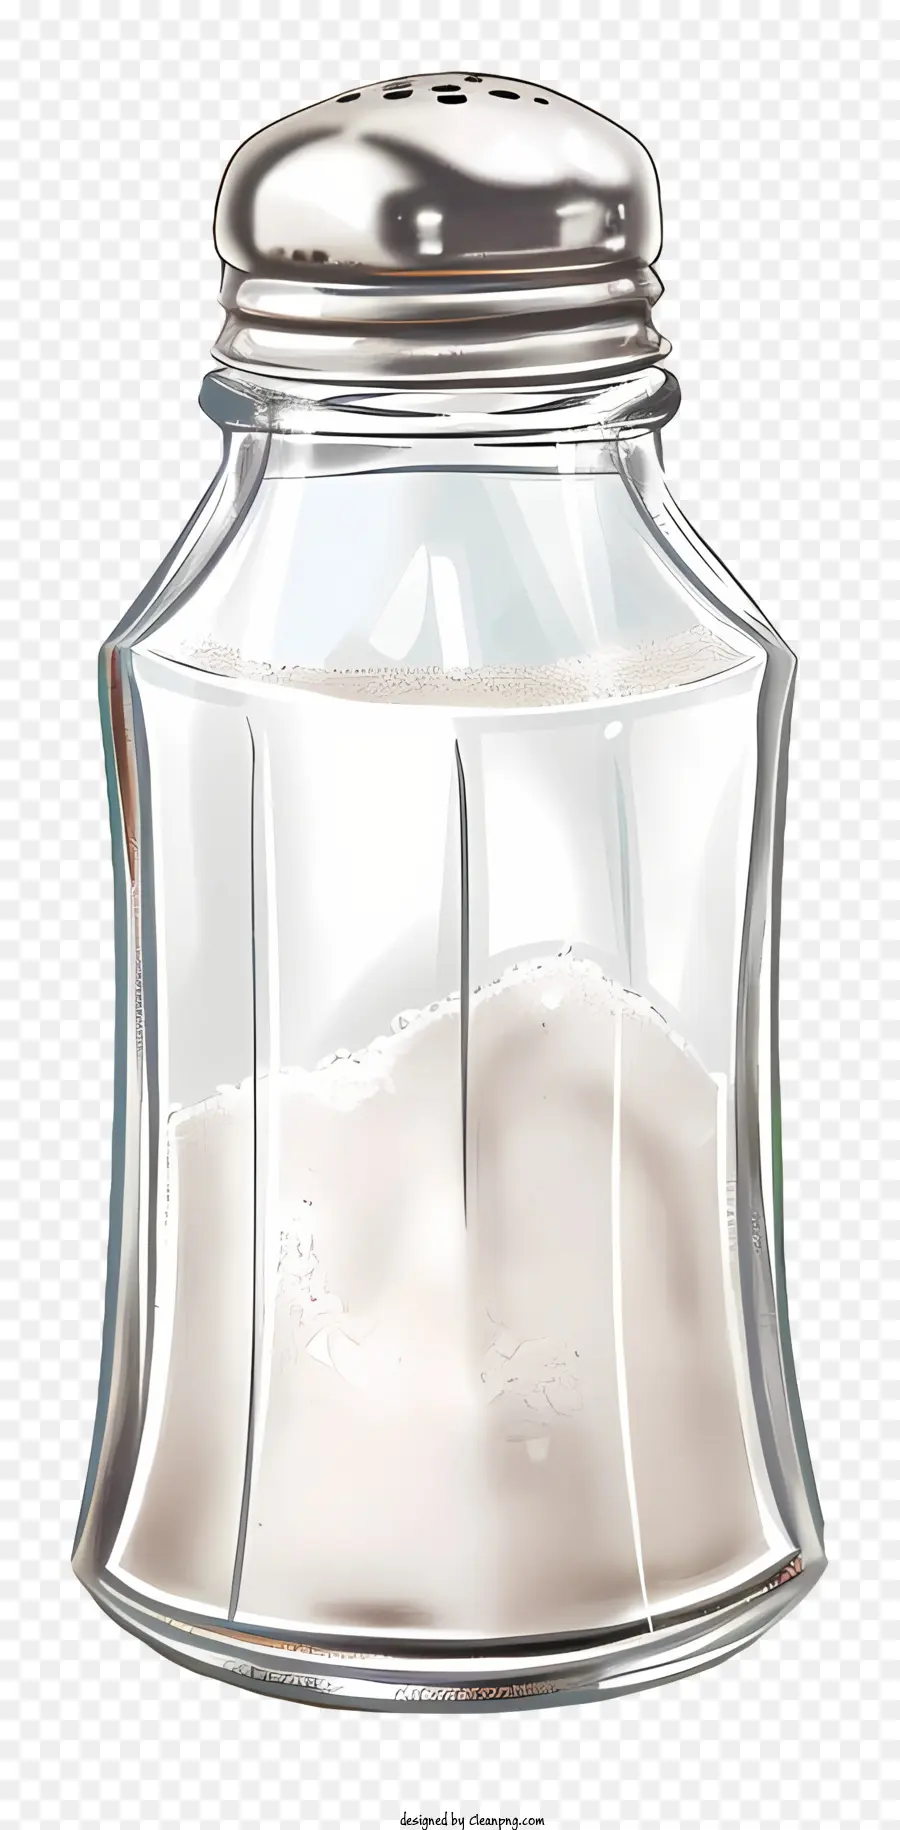 Salt Shaker Salt Shaker Glass Thép không gỉ Nhà bếp - Clear Glass Salt Shaker với thép không gỉ